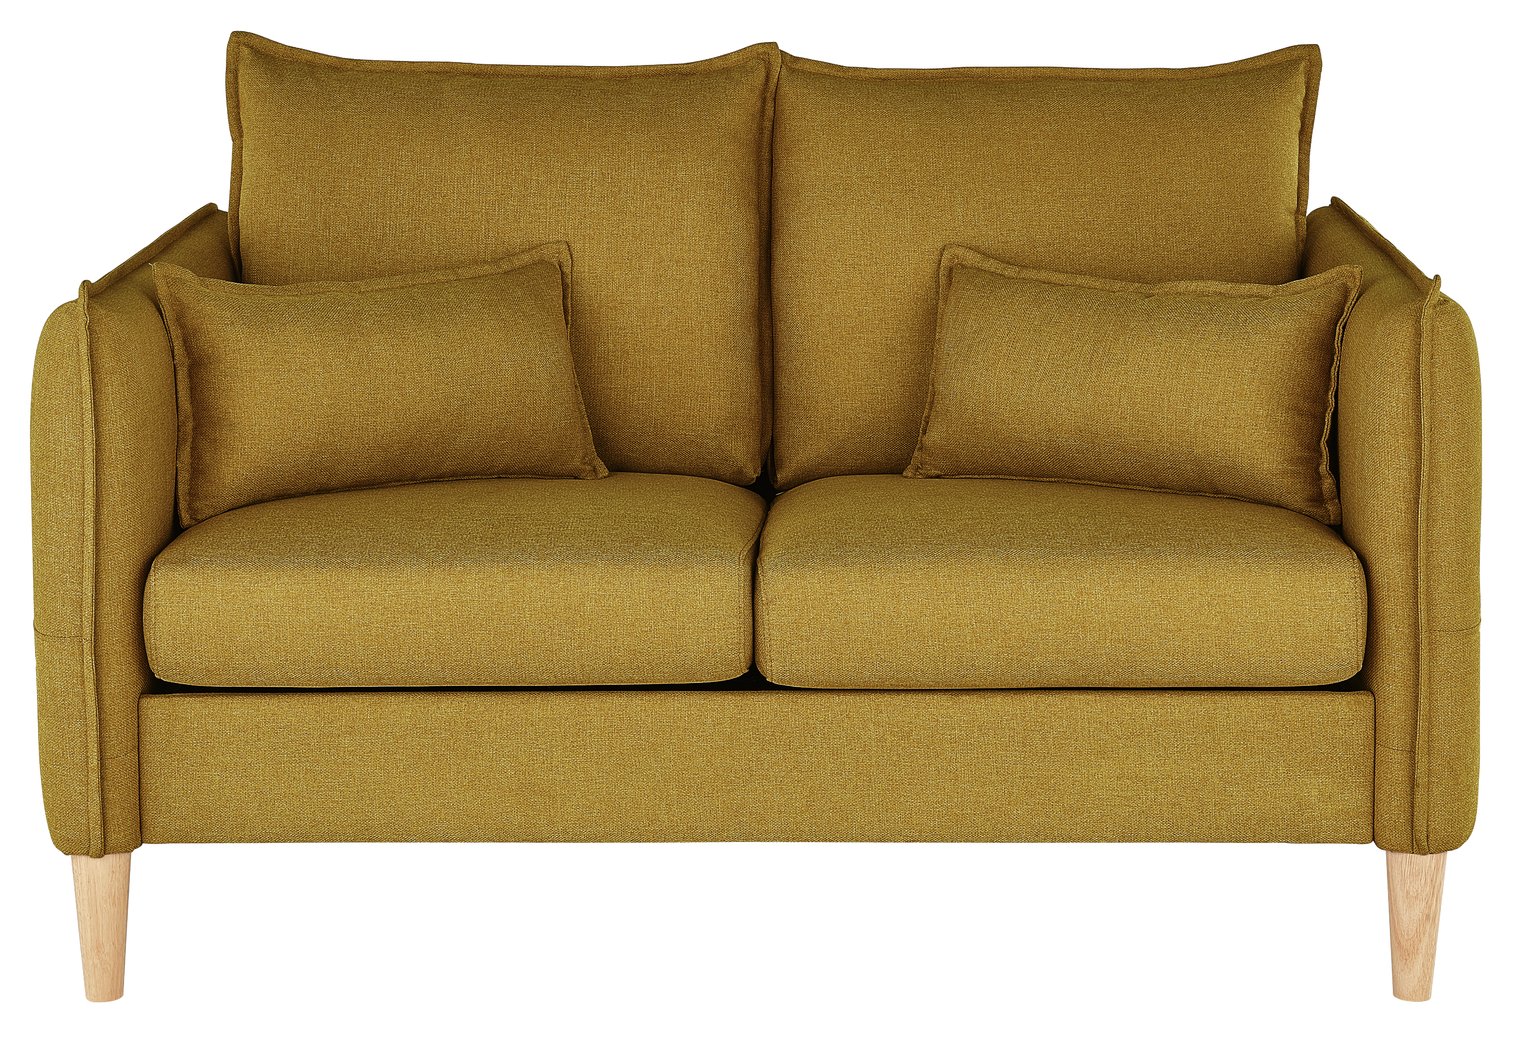 Argos Home Etta 2 Seater Fabric Sofa in a Box Review